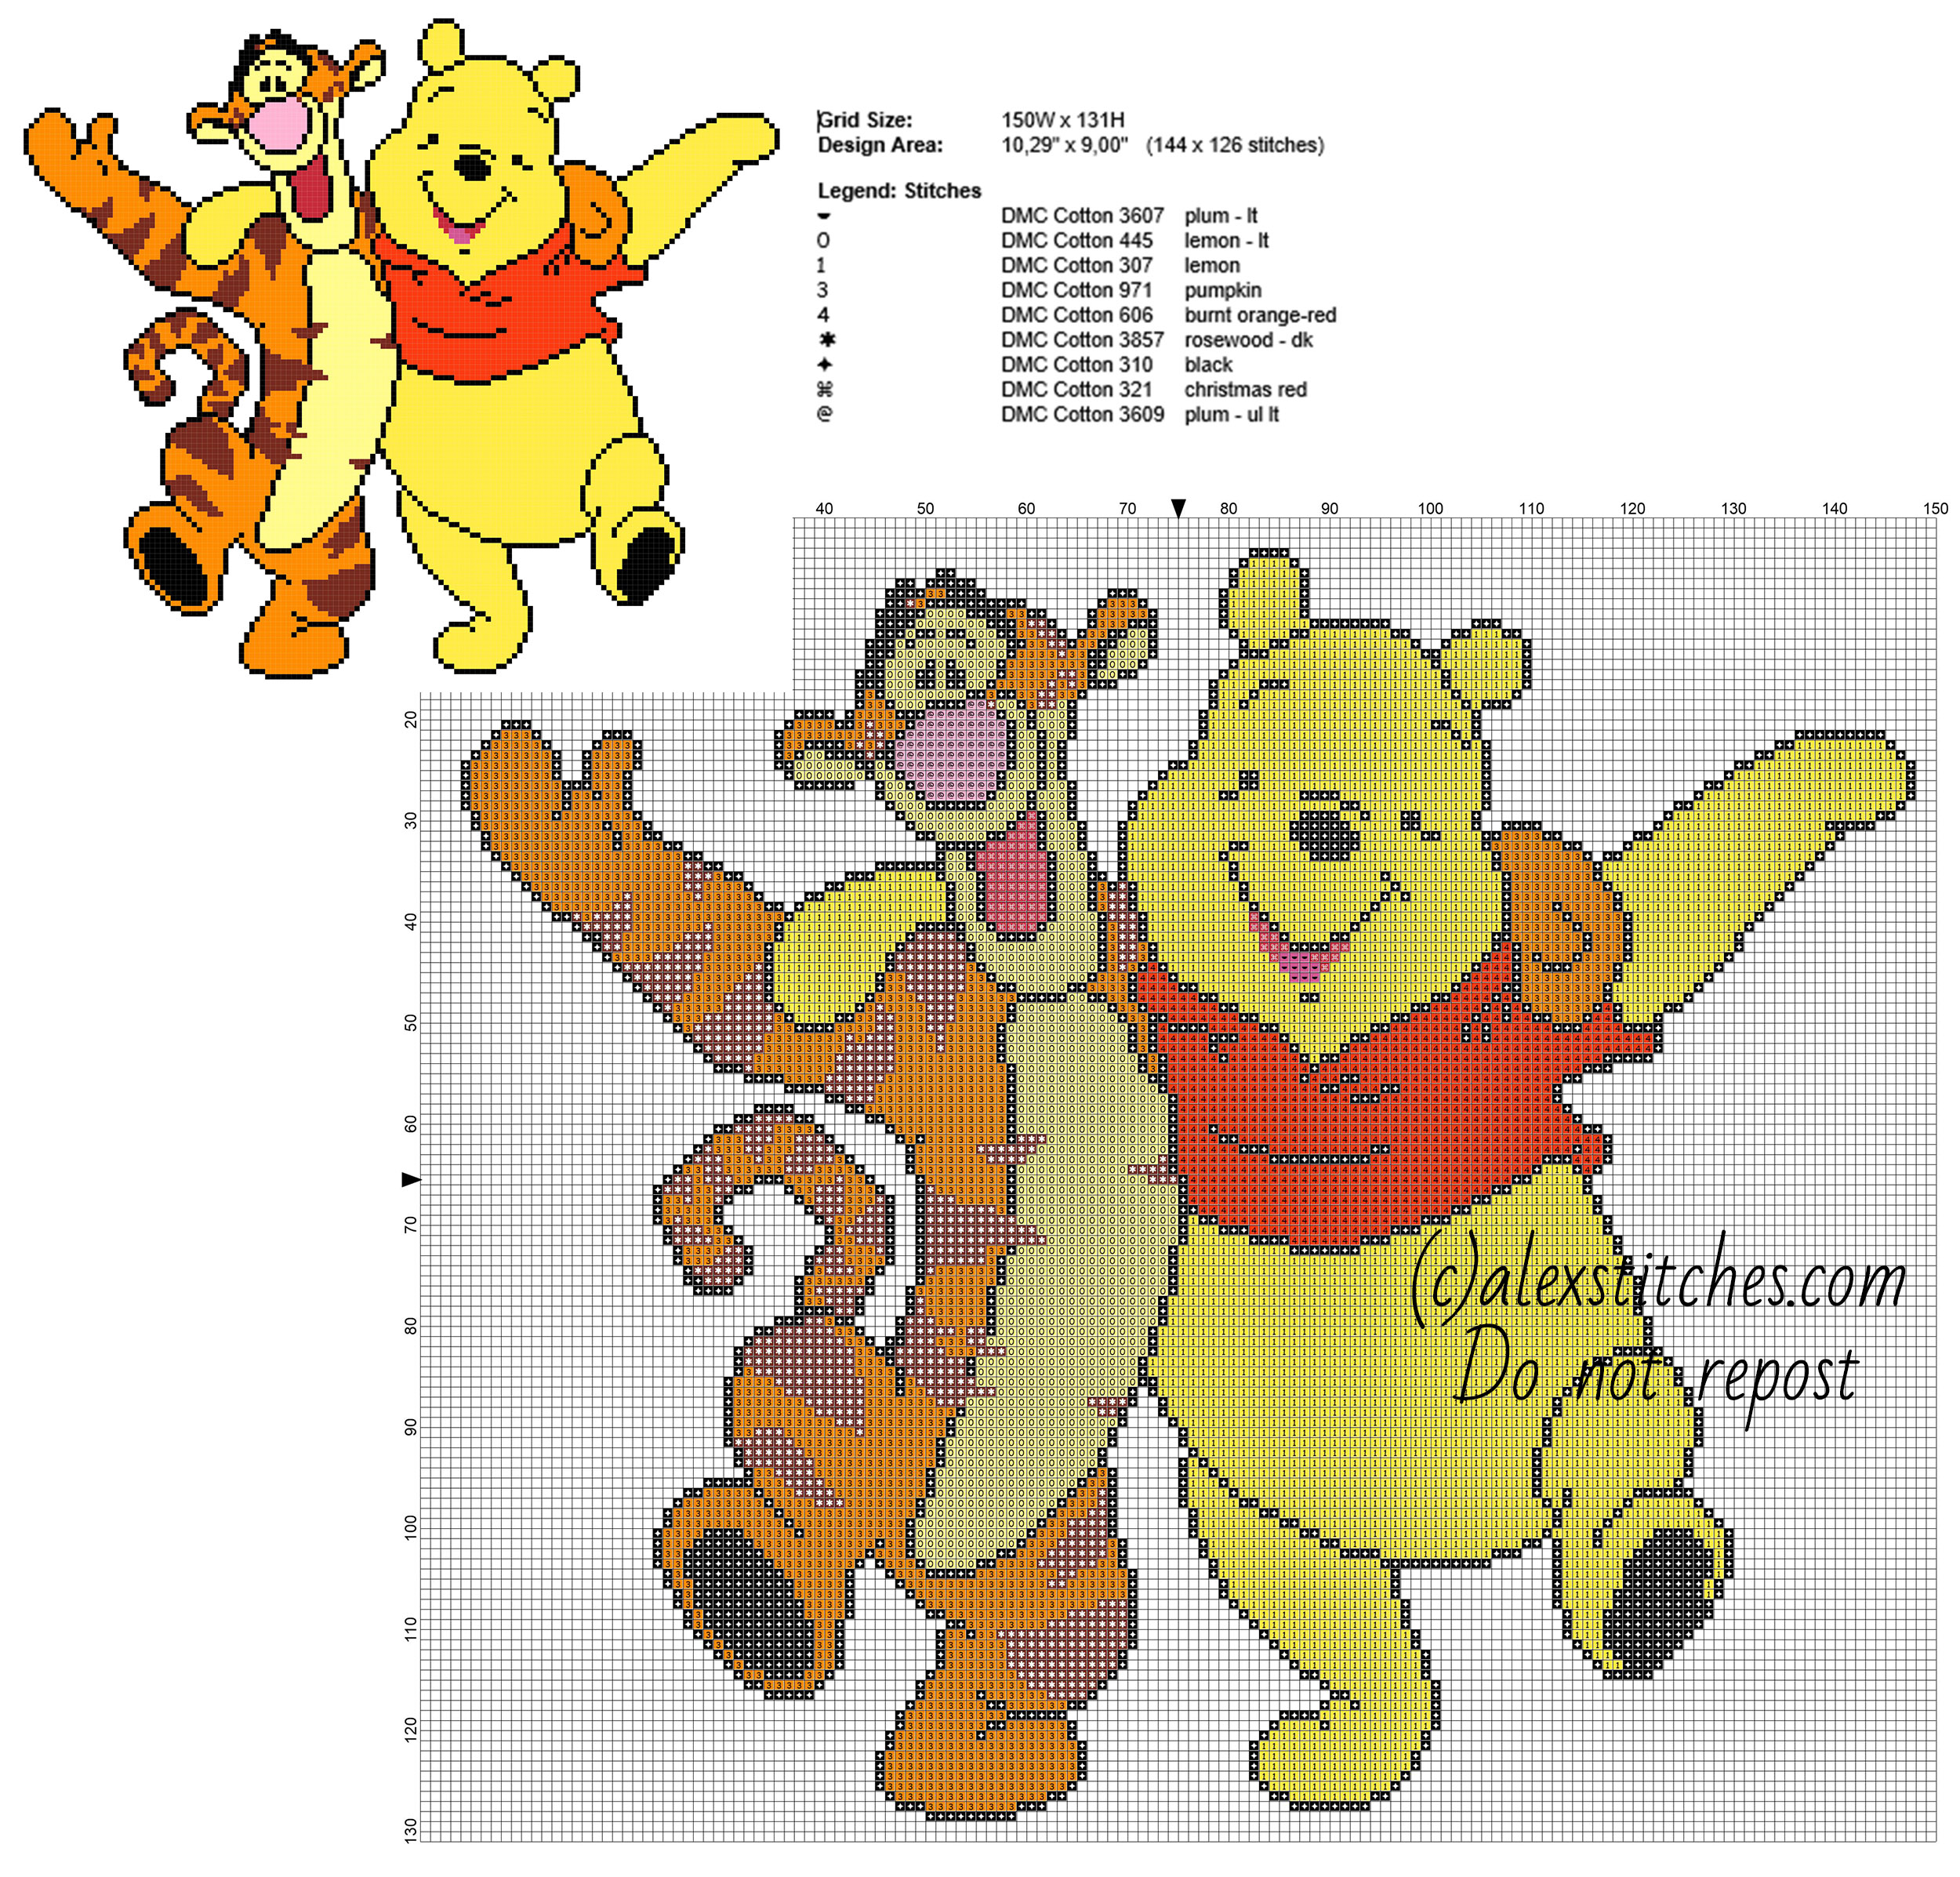 Winnie The Pooh and Tigger friends free cross stitch pattern 144 x 126 stitches 9 DMC threads